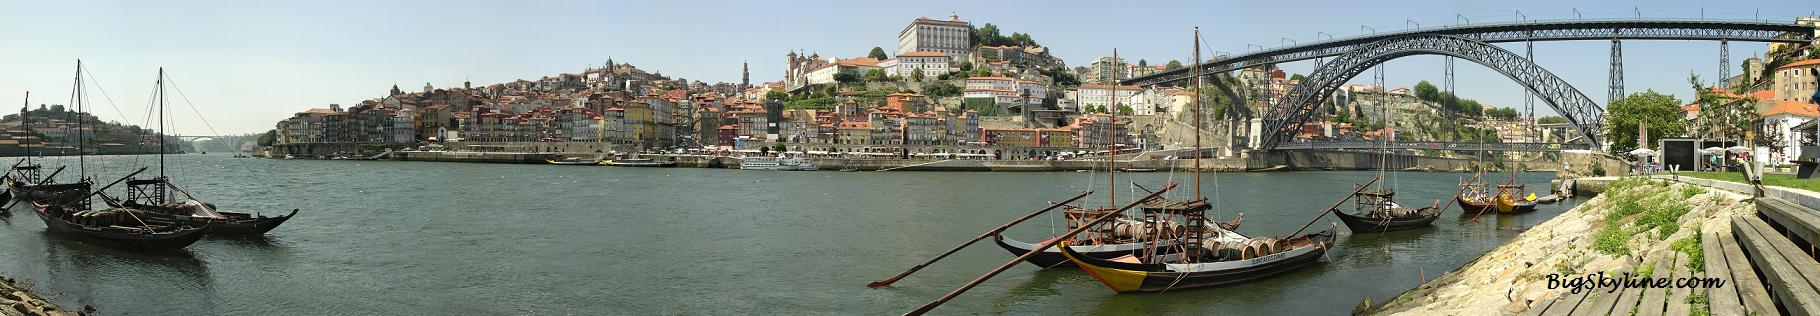 City Skyline picture of Oporto, Portugal